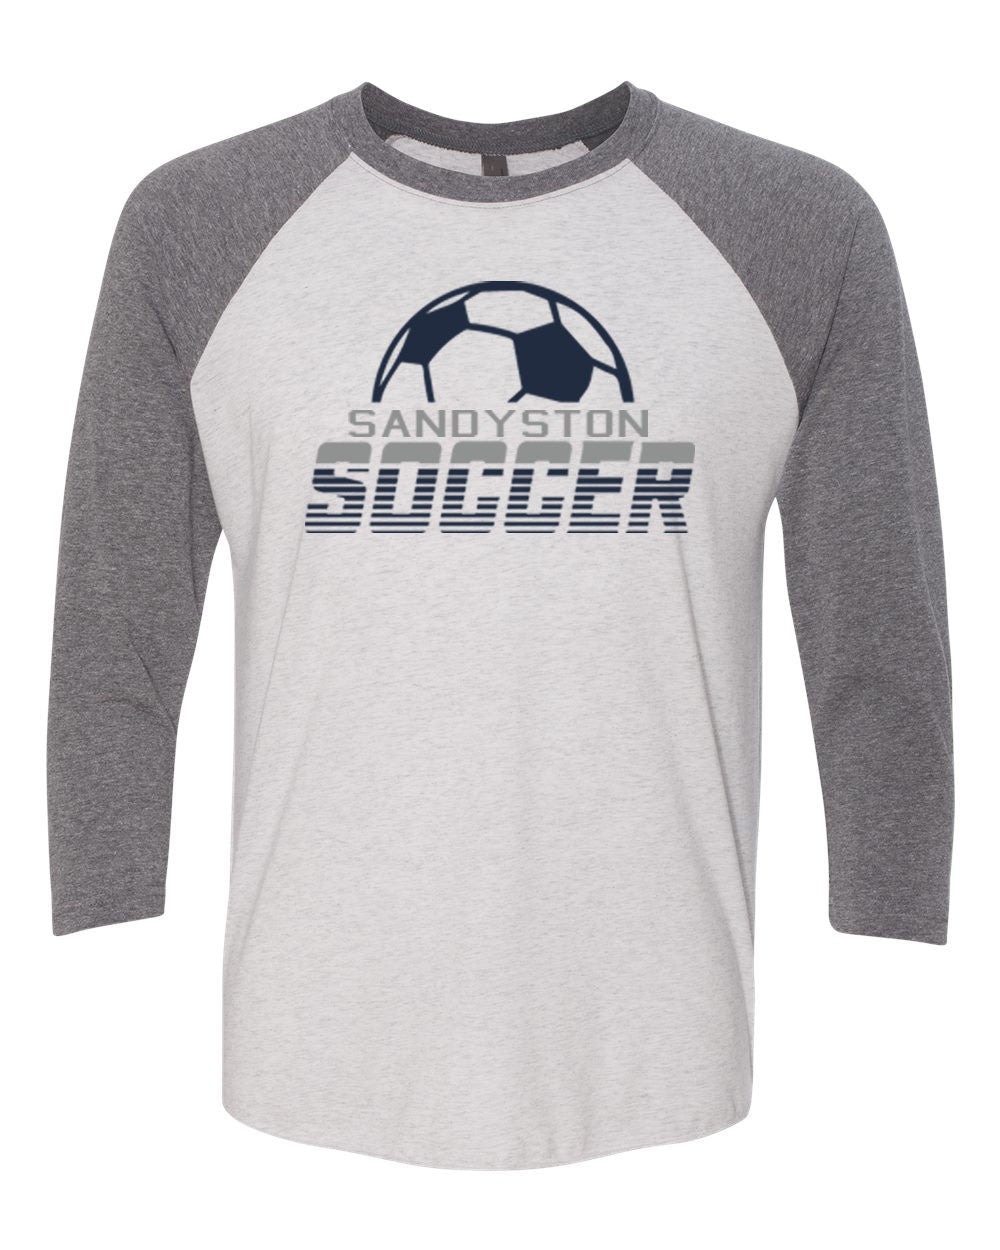 Sandyston Soccer Design 3 raglan shirt